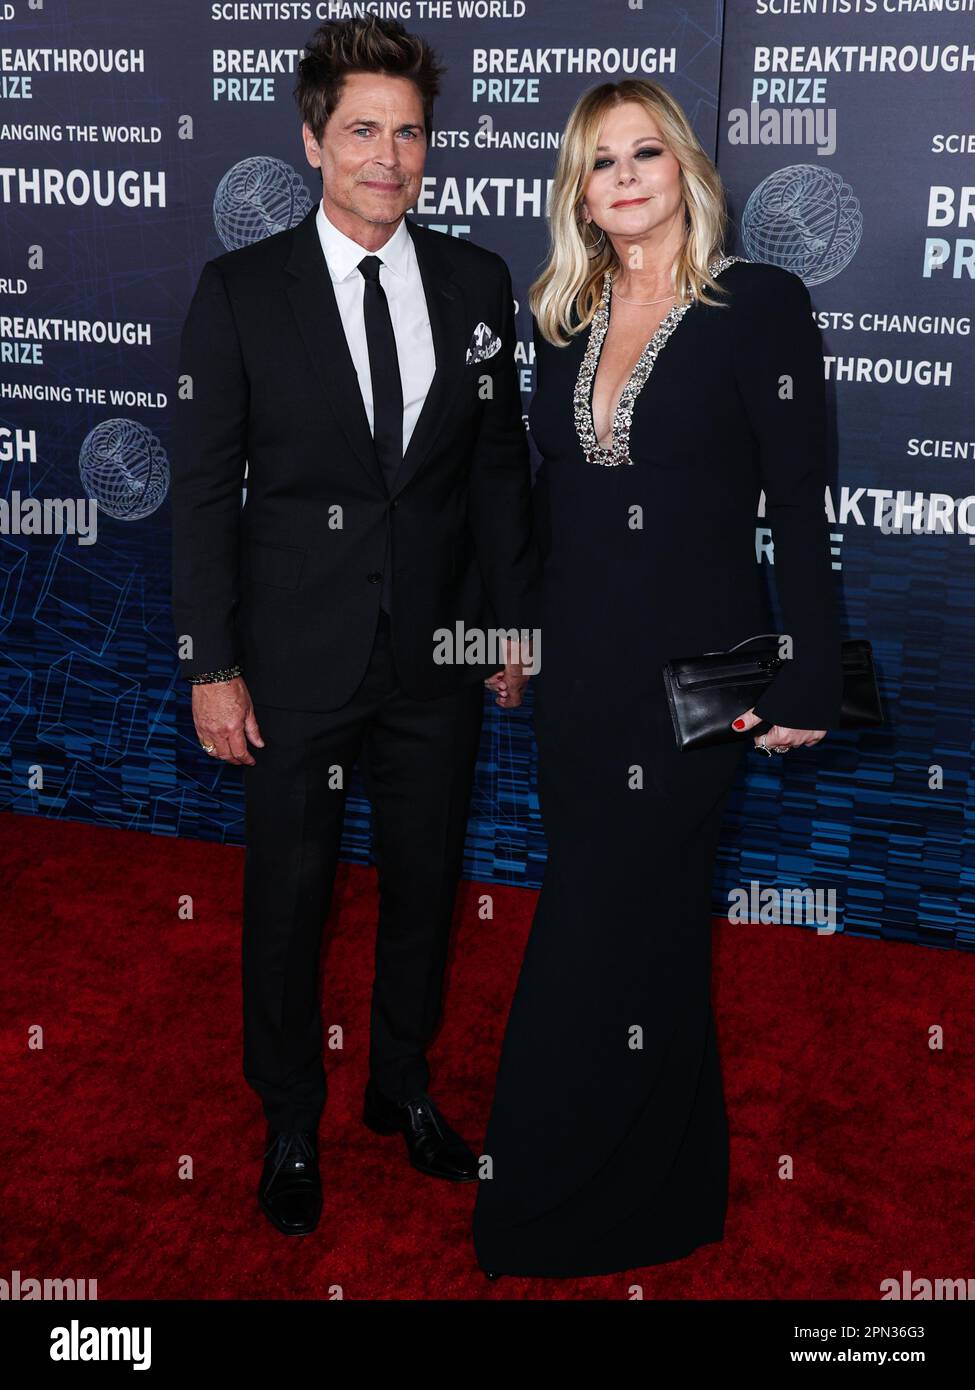 Rob Lowe Honors Wife Sheryl Berkoff on 32nd Wedding Anniversary